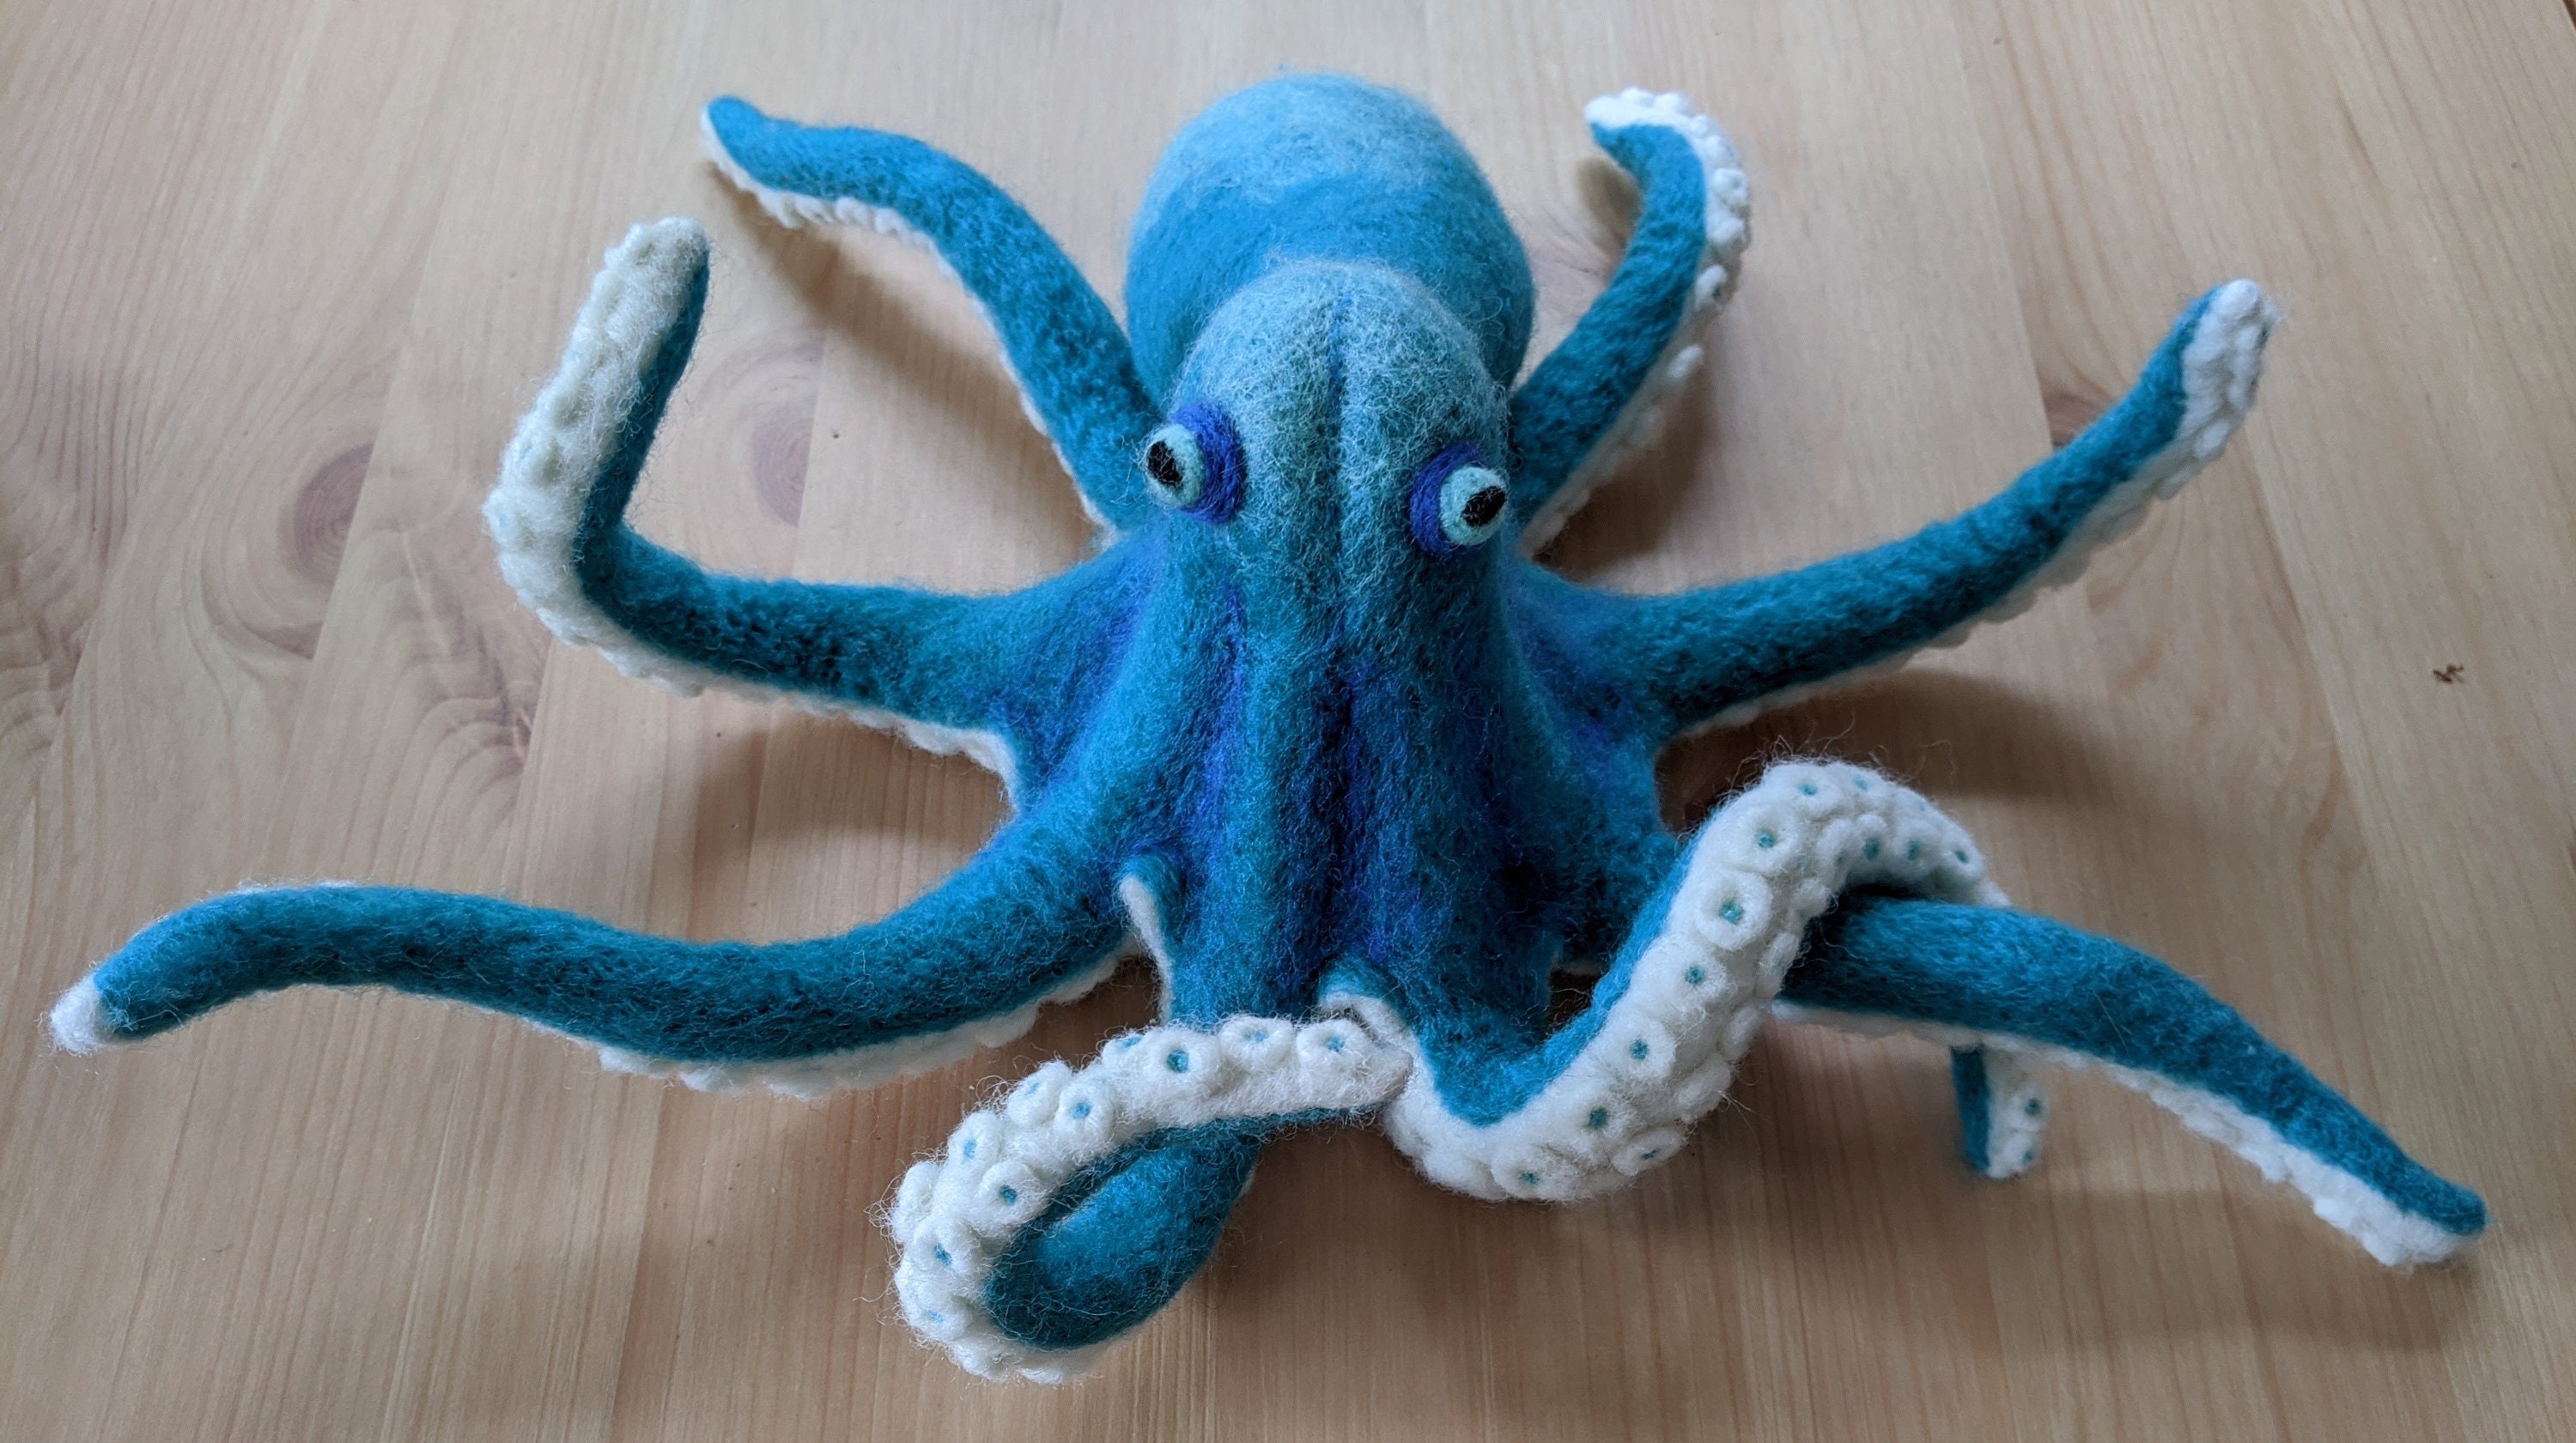 Octopus Needle Felting Kit